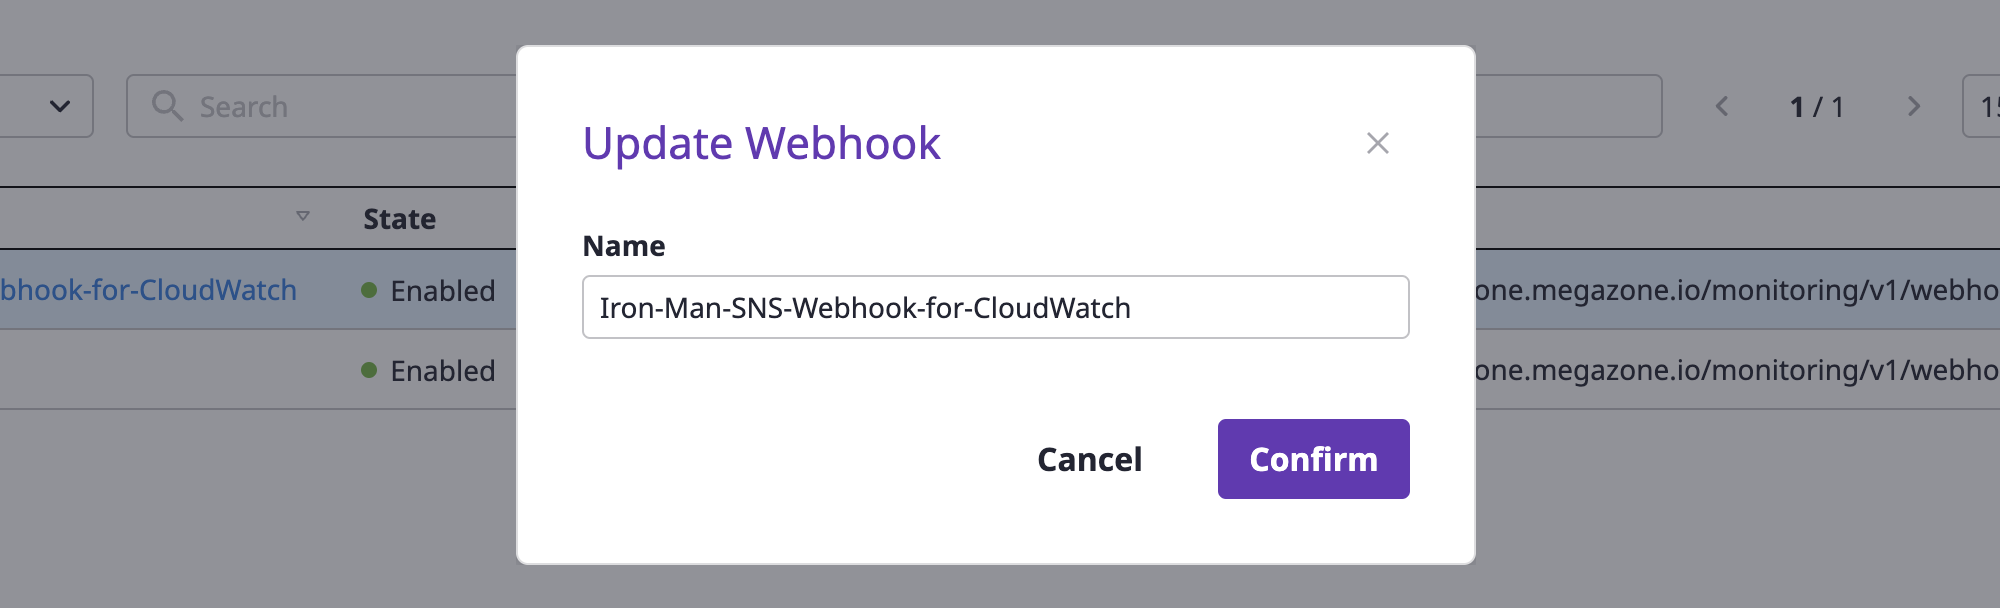 update-webhook-name-2